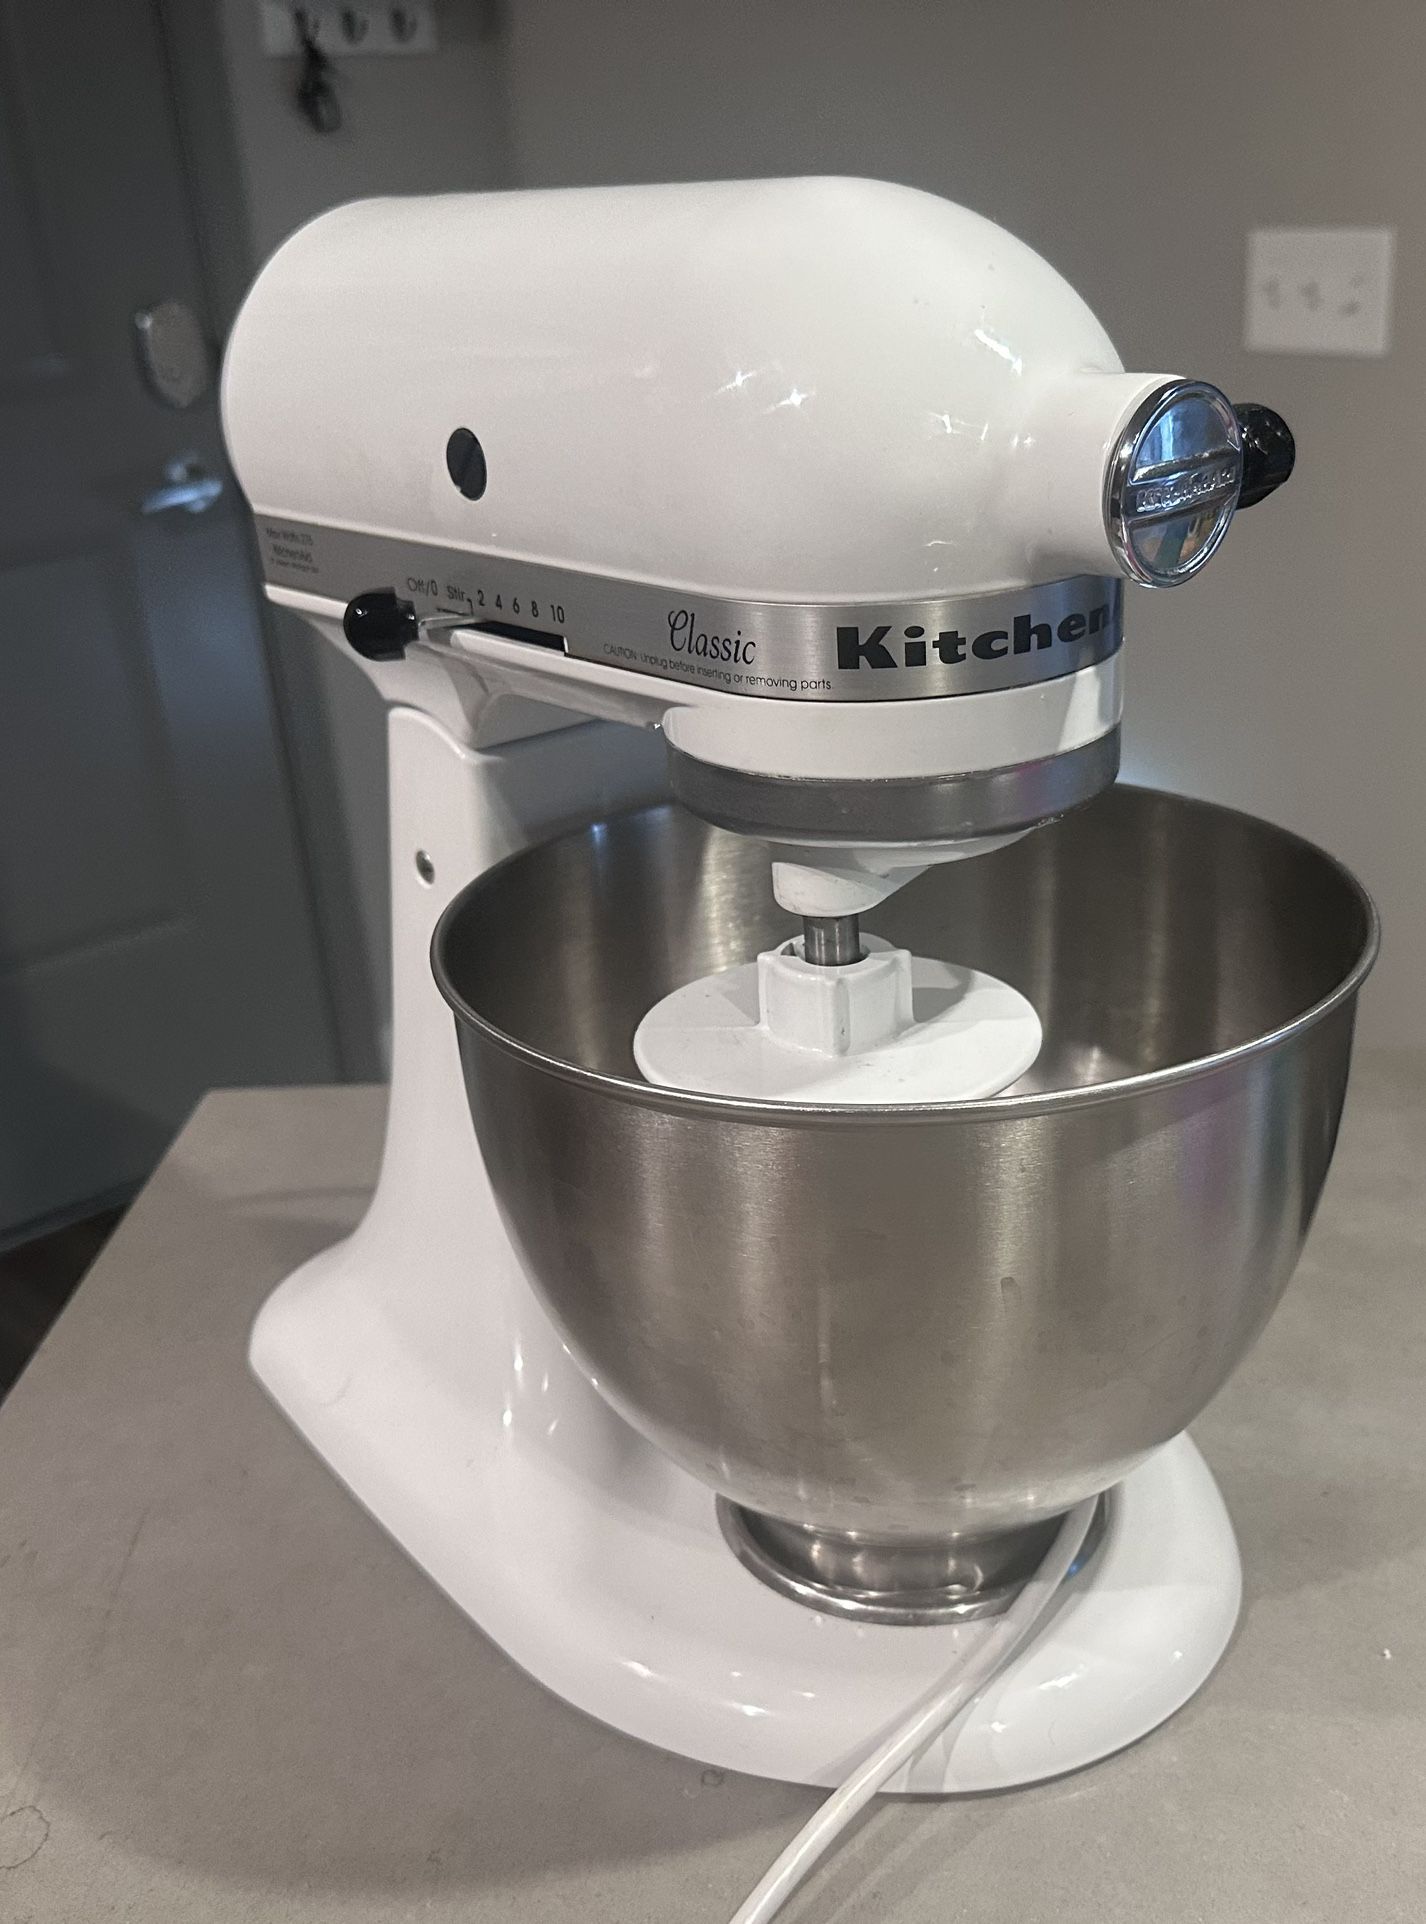 KitchenAid - Classic Series 4.5 Quart Tilt Head Stand Mixer